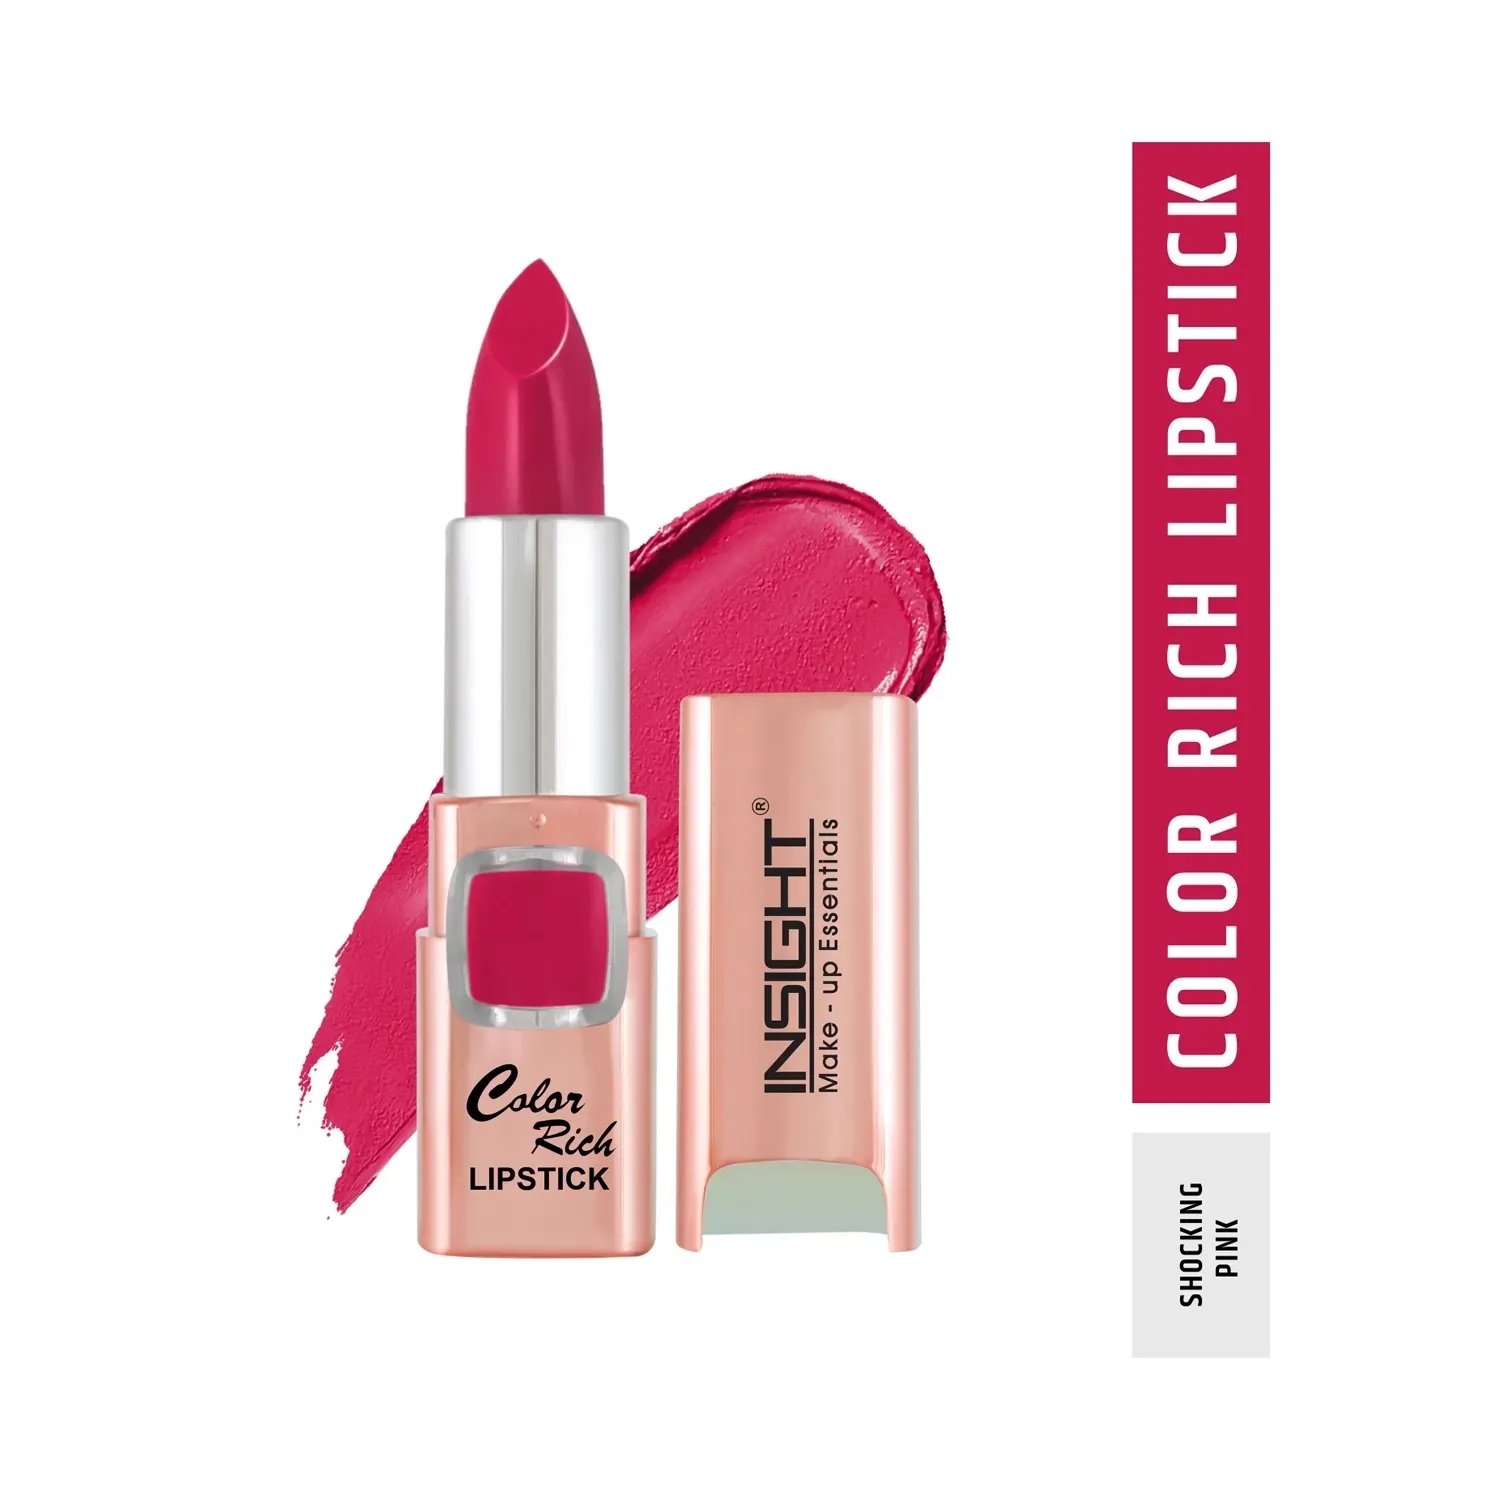 Insight Cosmetics | Insight Cosmetics Color Rich Lipstick - Shocking Pink (4.2g)